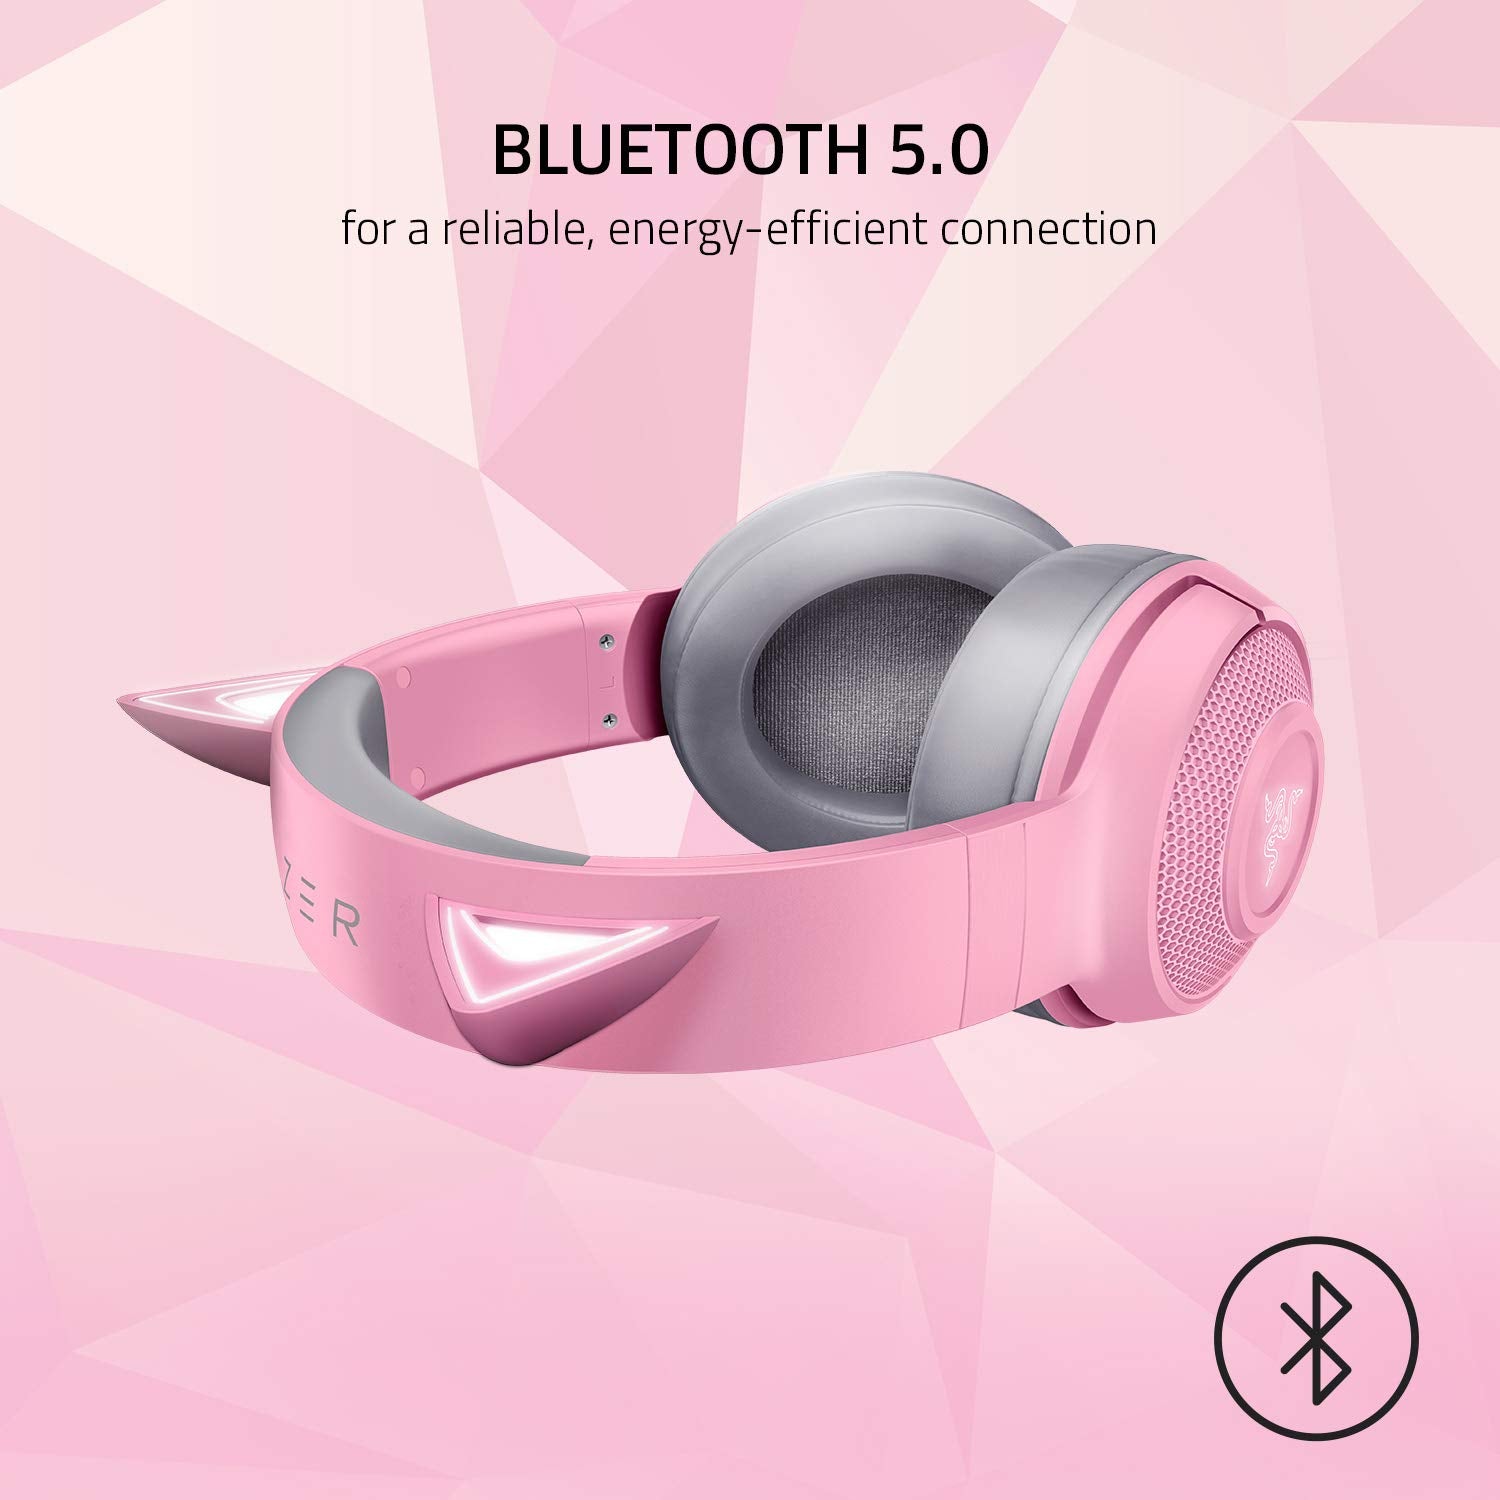 Razer Kraken BT Kitty Edition - Bluetooth Wireless Gaming Headset (The Wireless Cat-Ear Headphones, Chroma RGB Lighting, Internal Beamforming Microphone, 40 mm Driver, Earcup Controls) Quartz